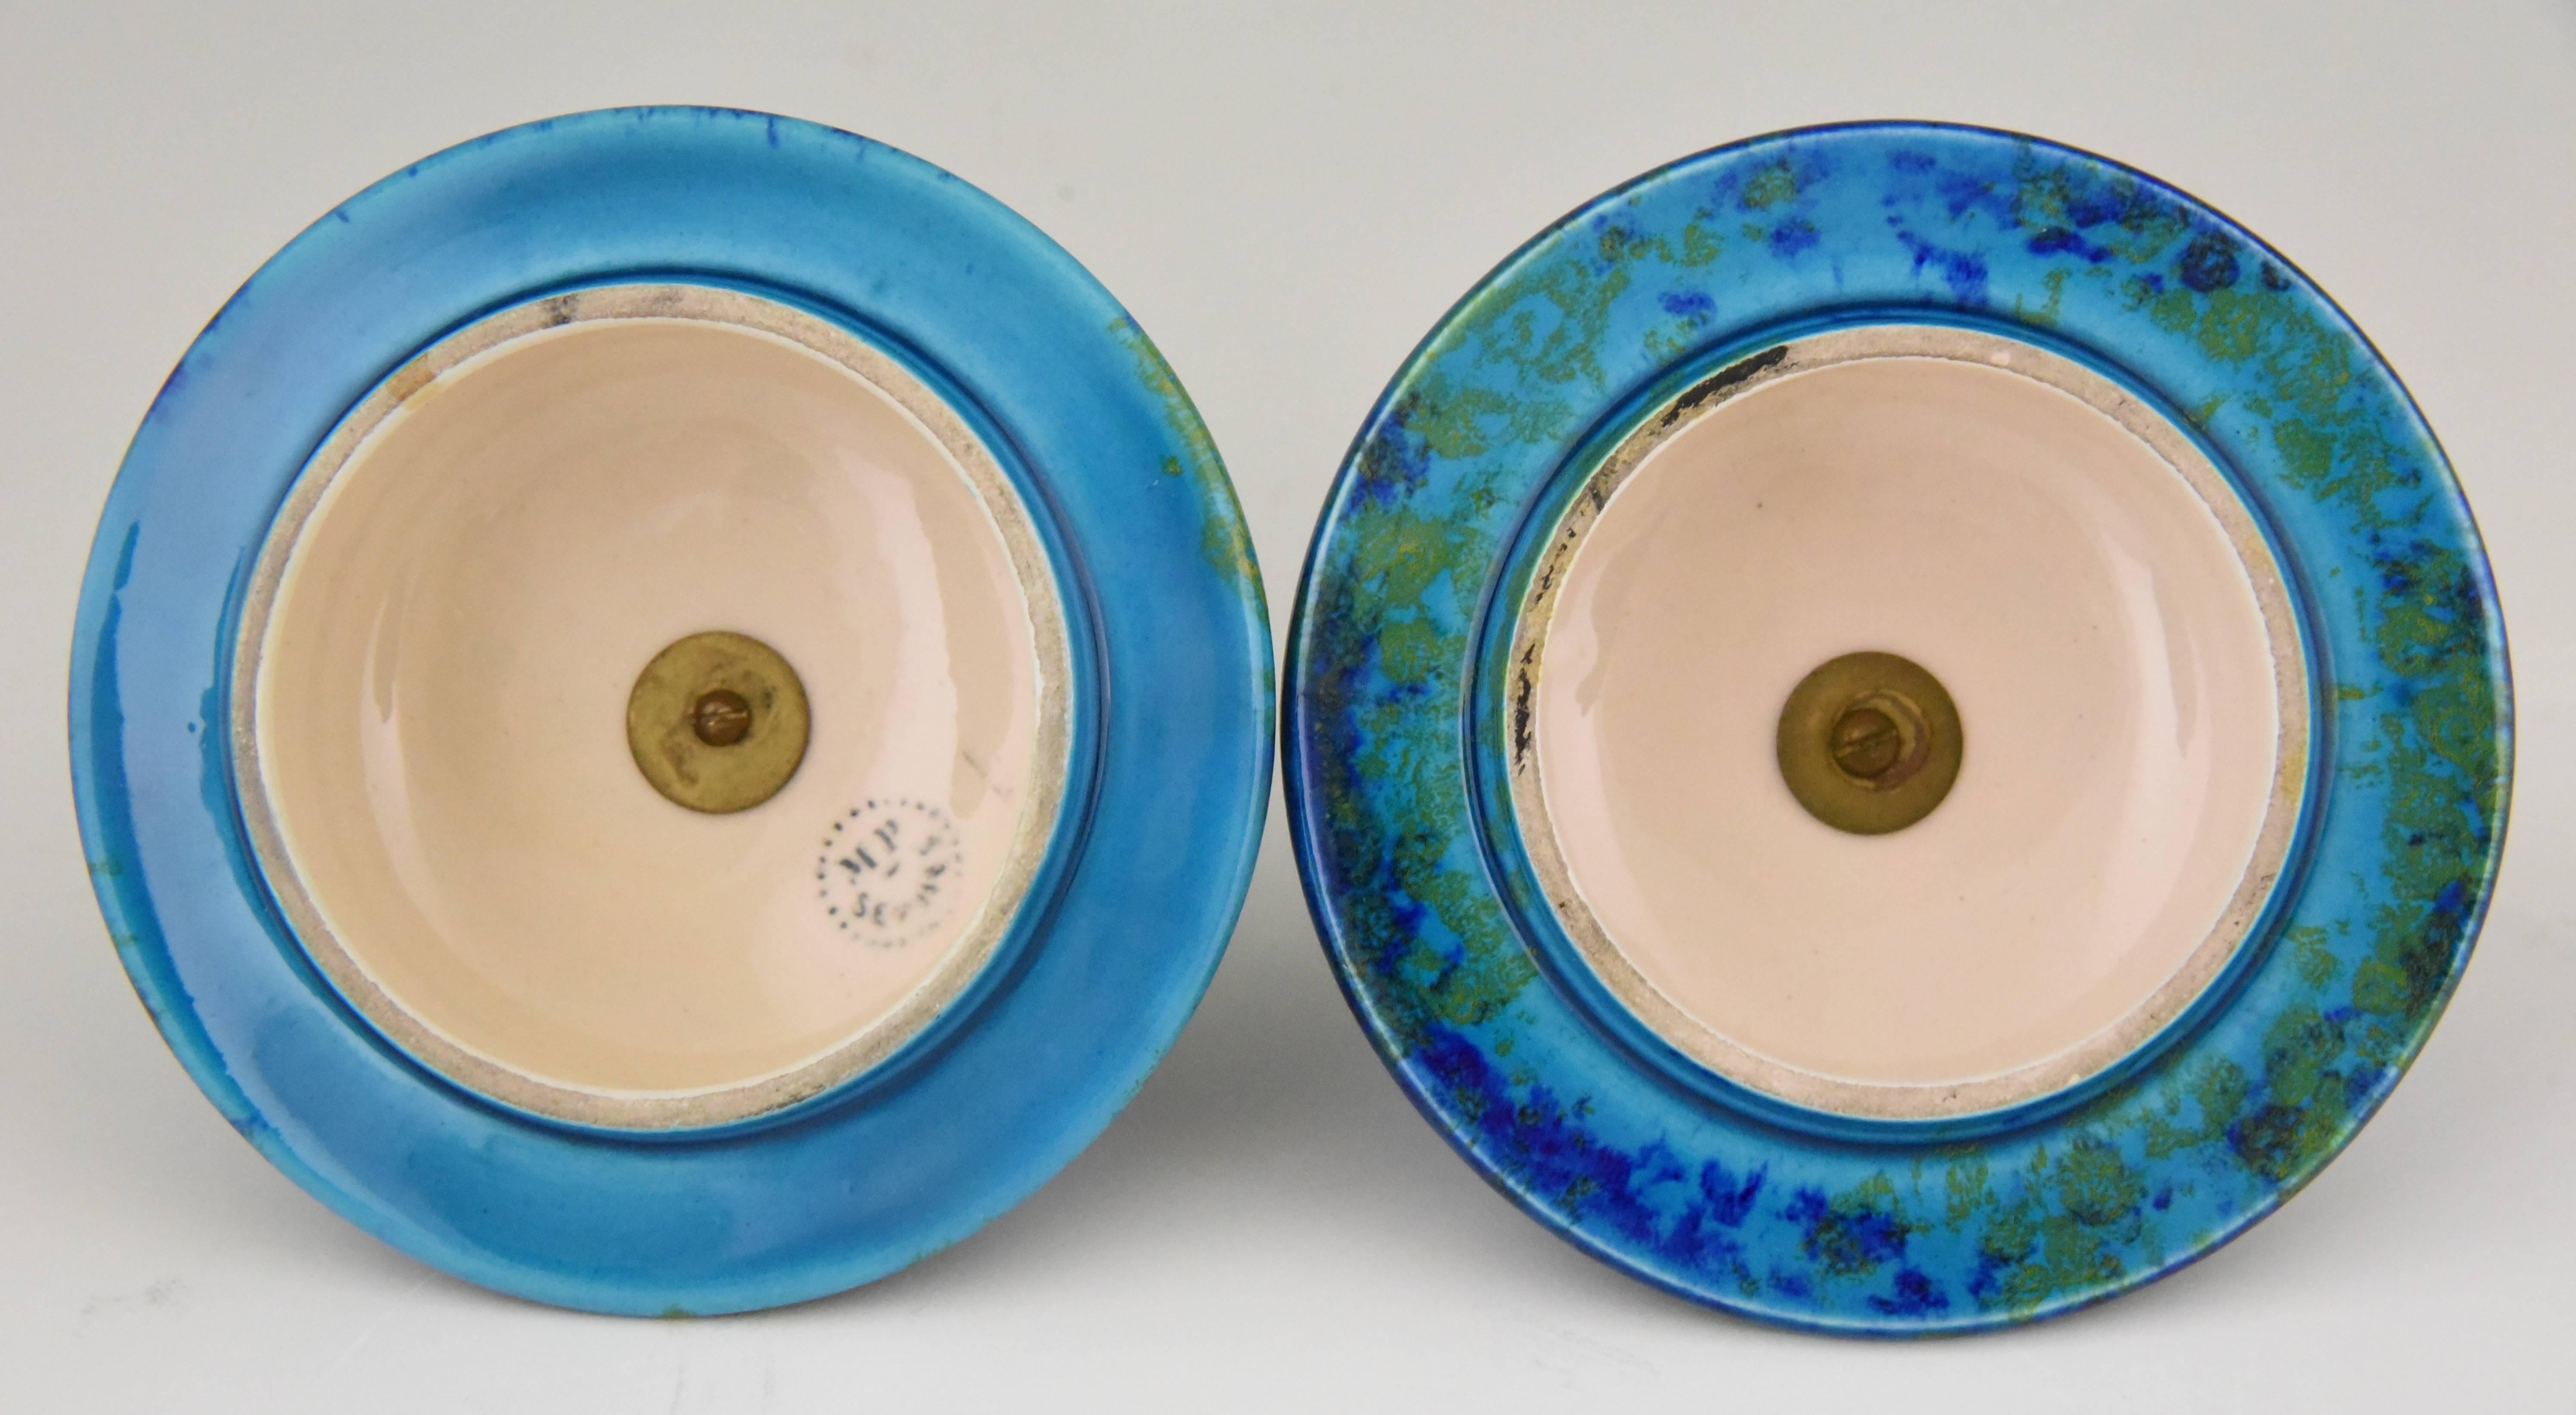 Bronze Art Deco Pair of Ceramic Vases-Urns with Blue Glaze  Paul Milet for Sèvres, 1925